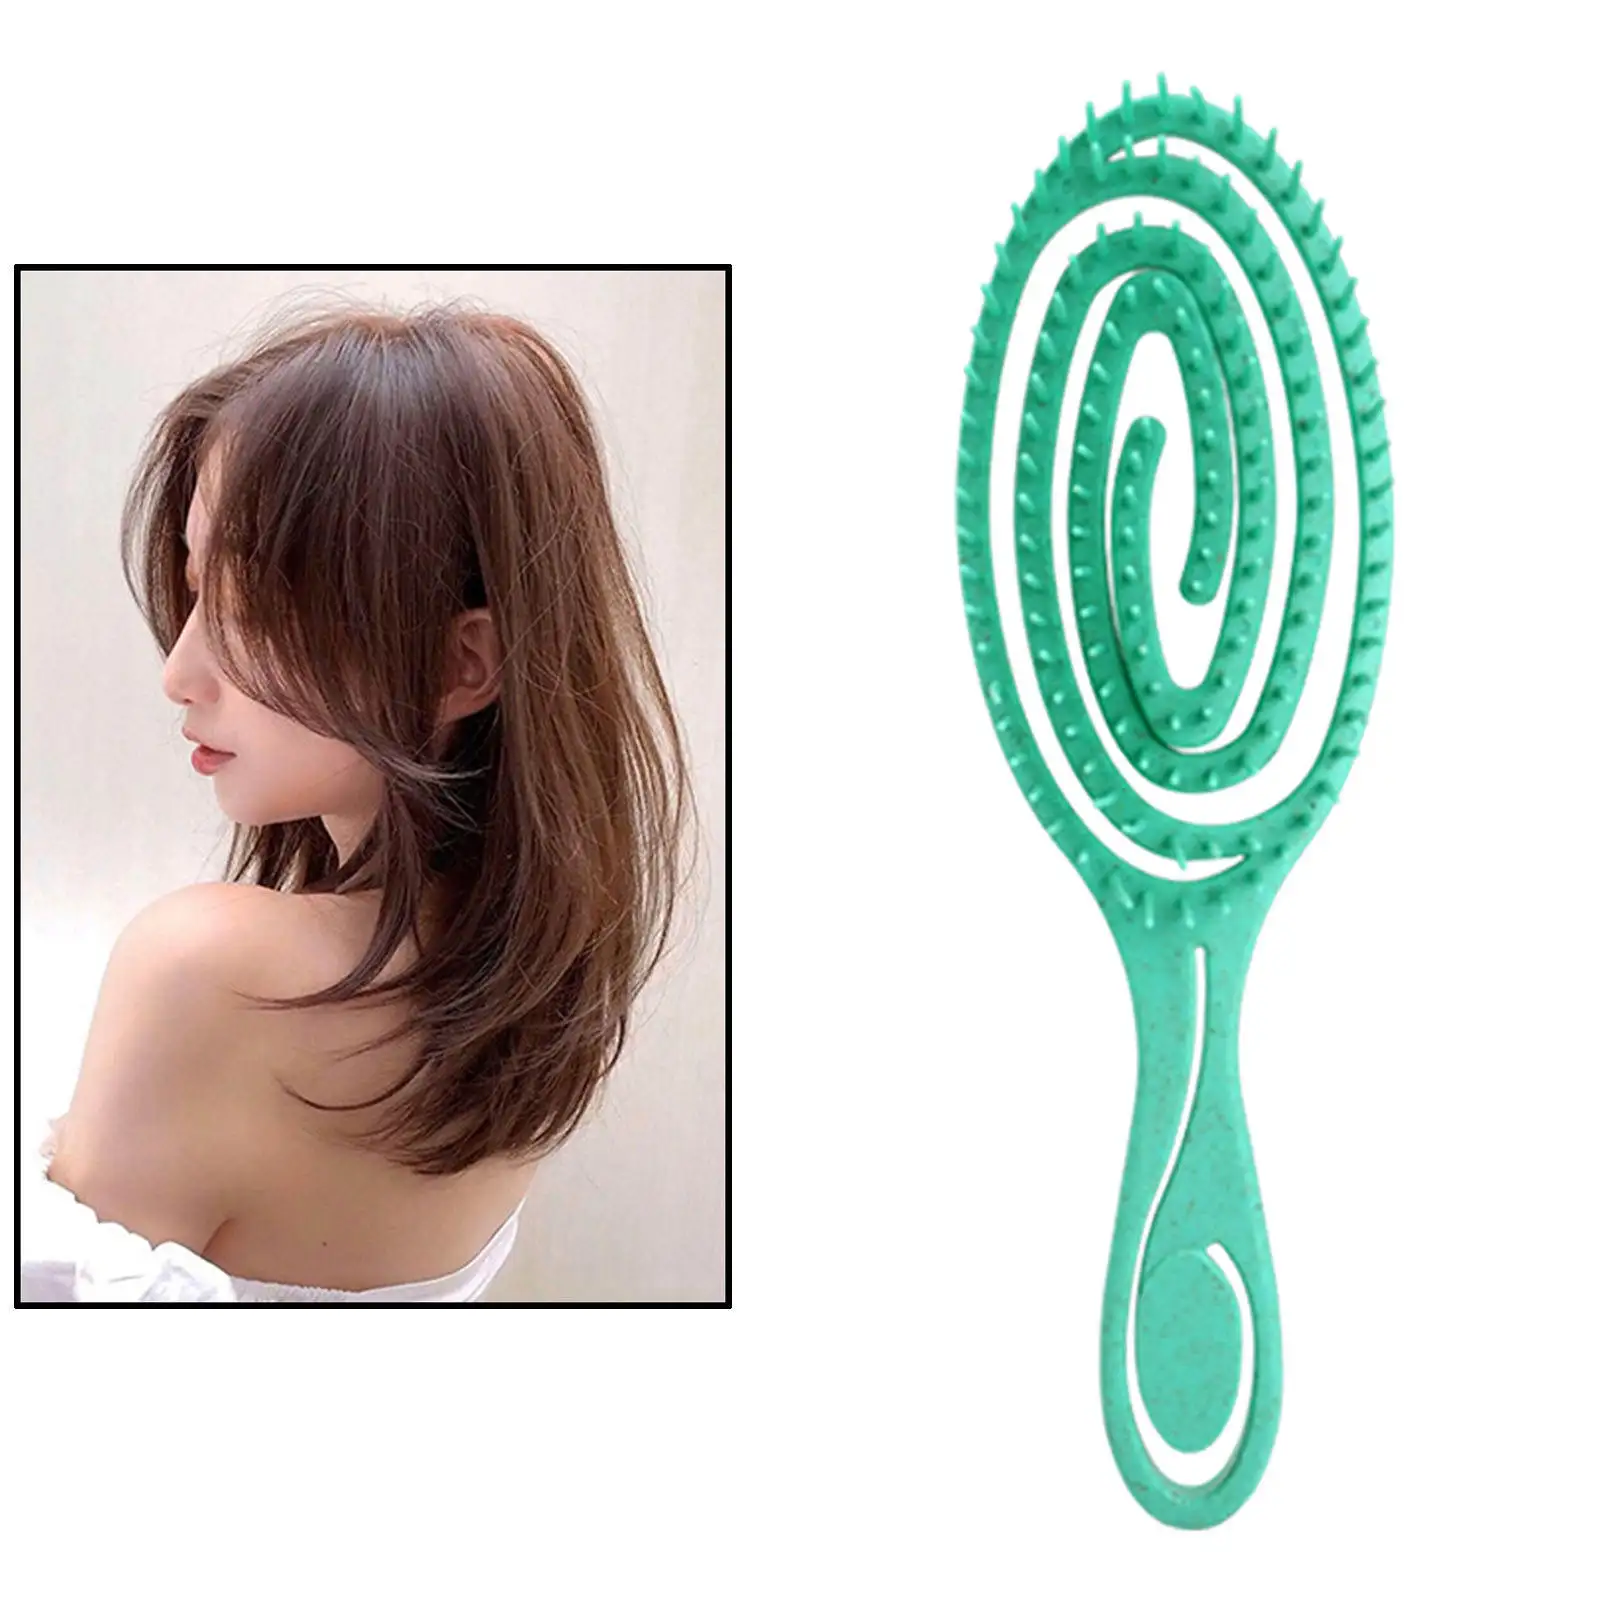 Vented Hair Brush Hair Detangler Styling Tools Faster Blow Drying Comb for Barber Hairdressing